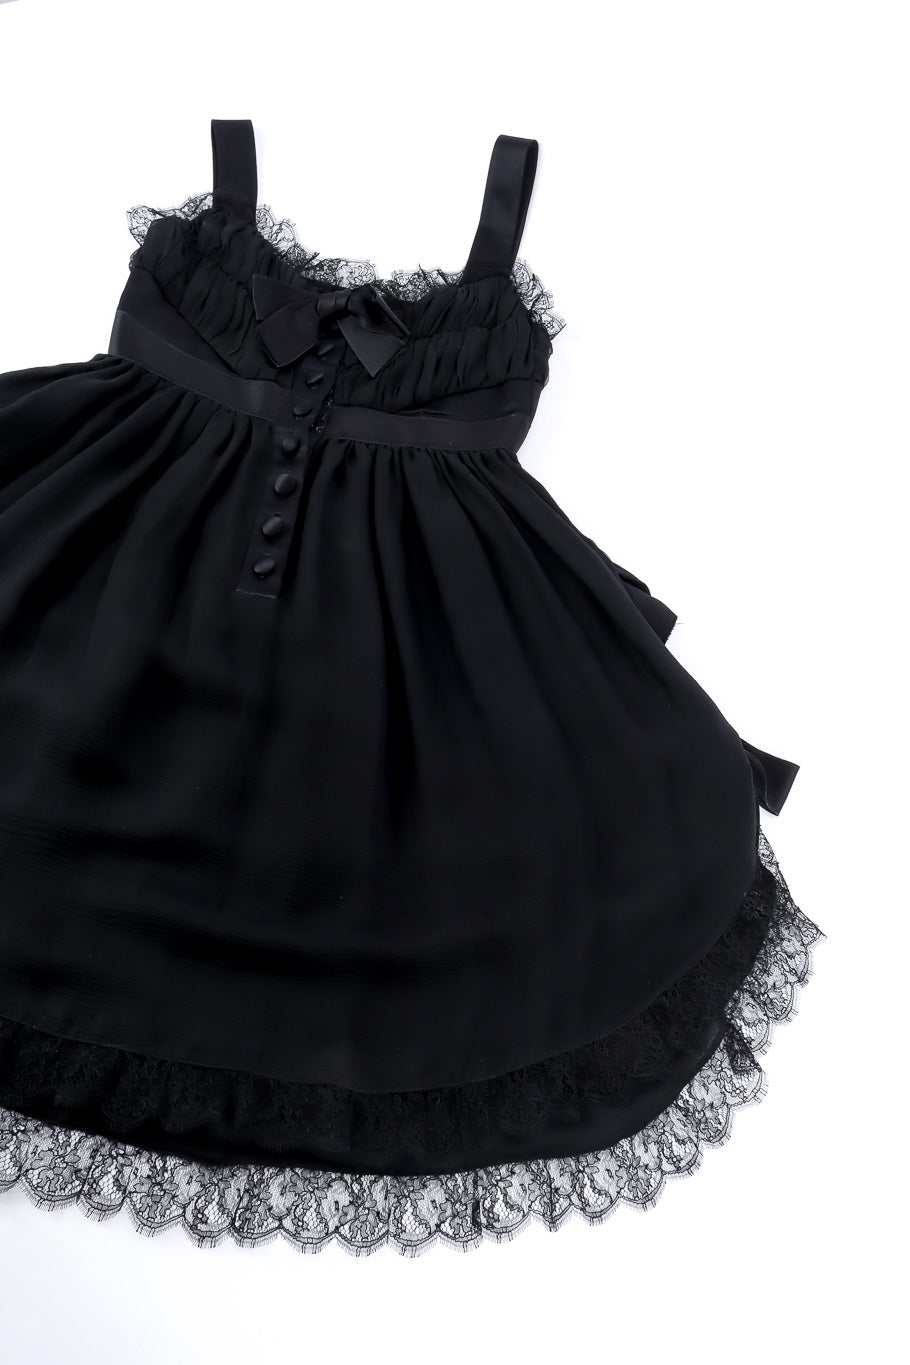 Mini dress by Chanel flat lay @recessla